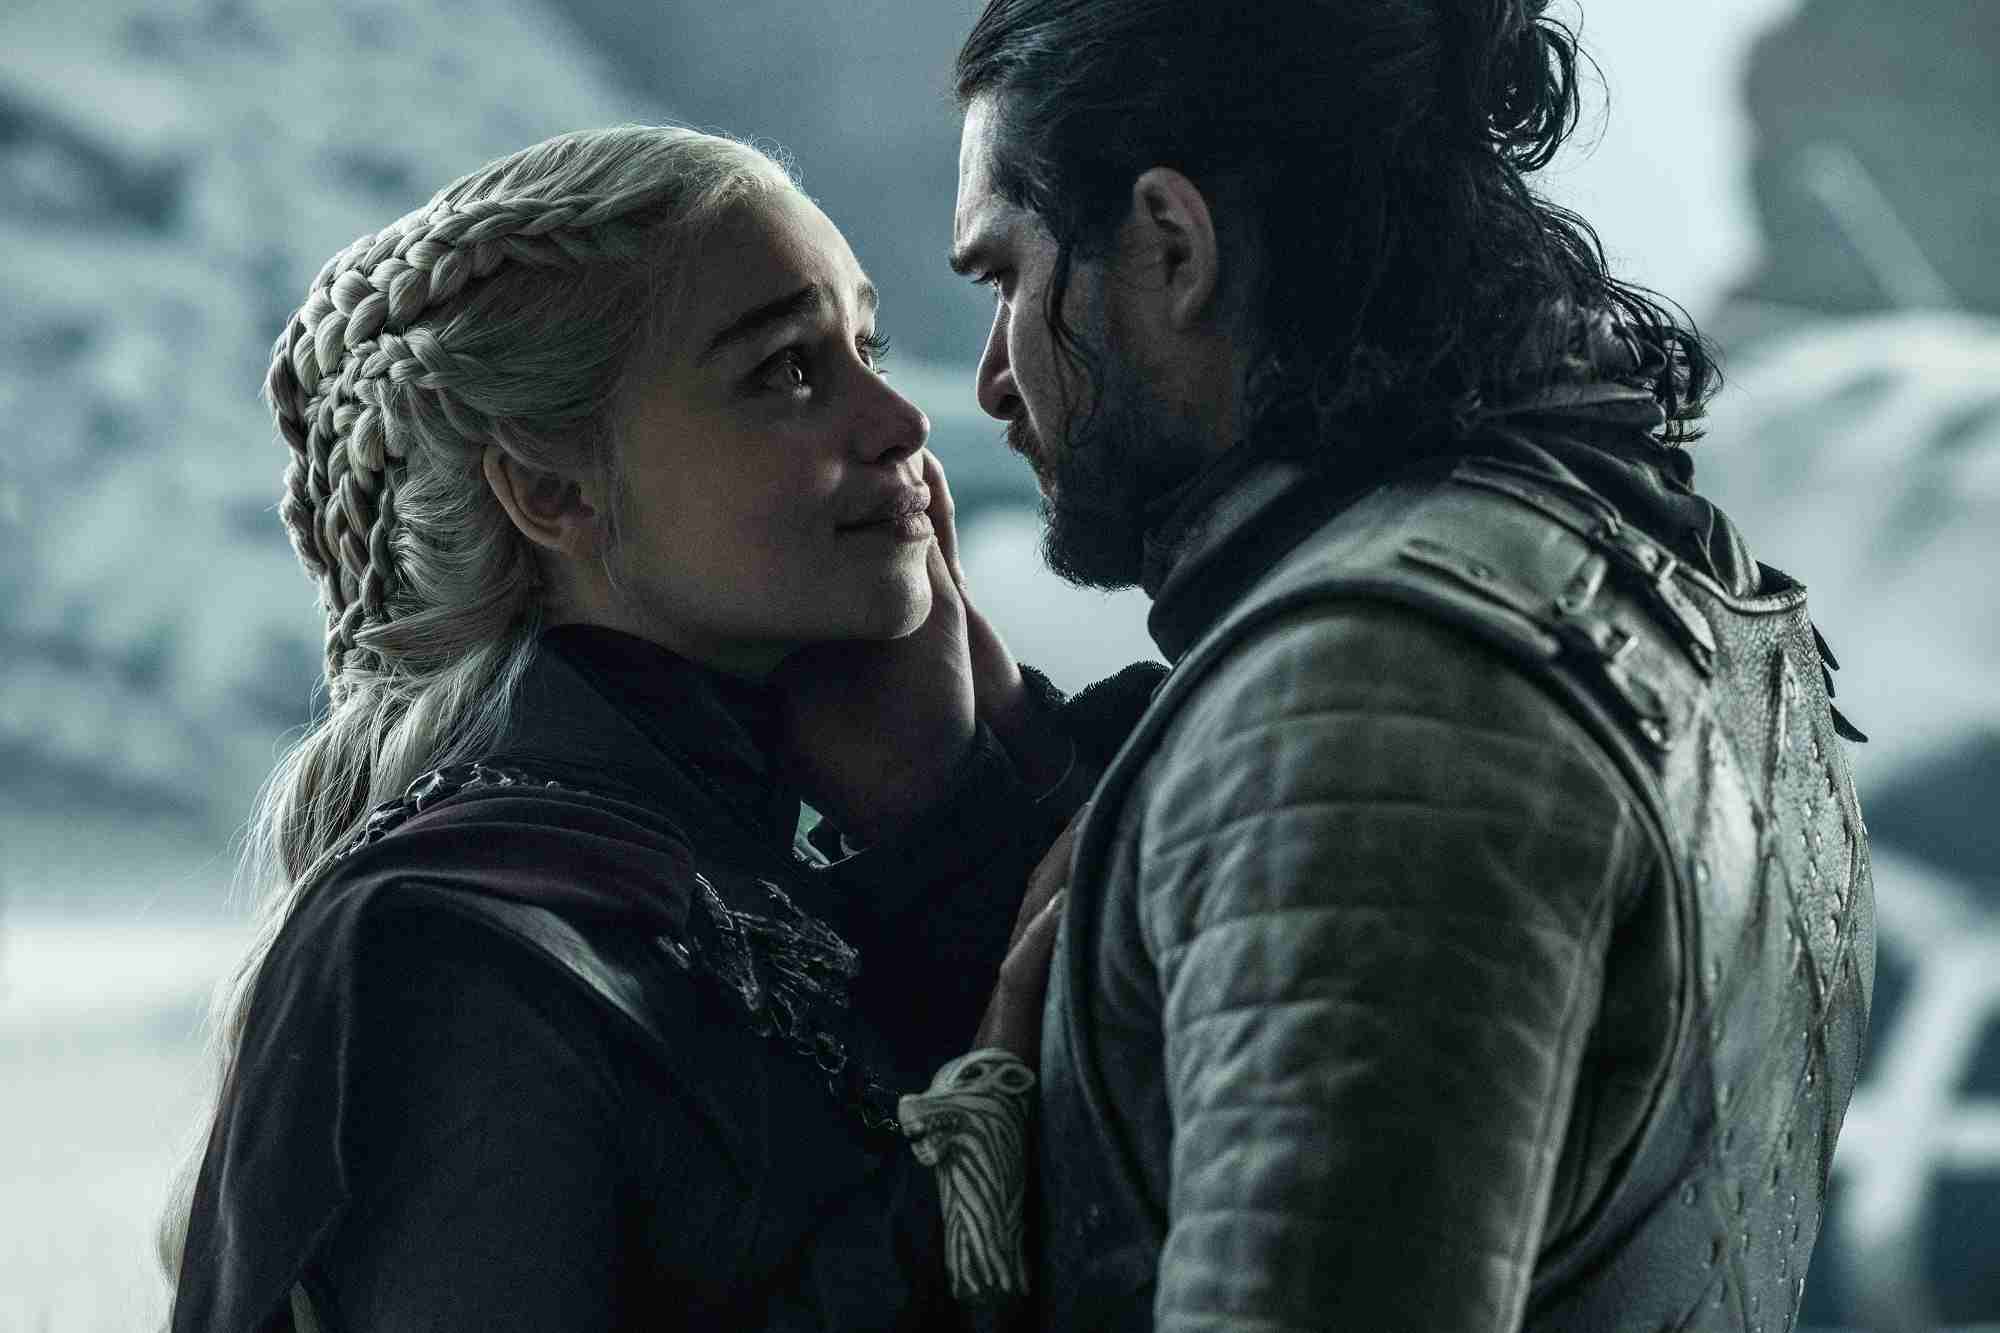 Jon Snow tötet Dany im Game of Thrones Finale